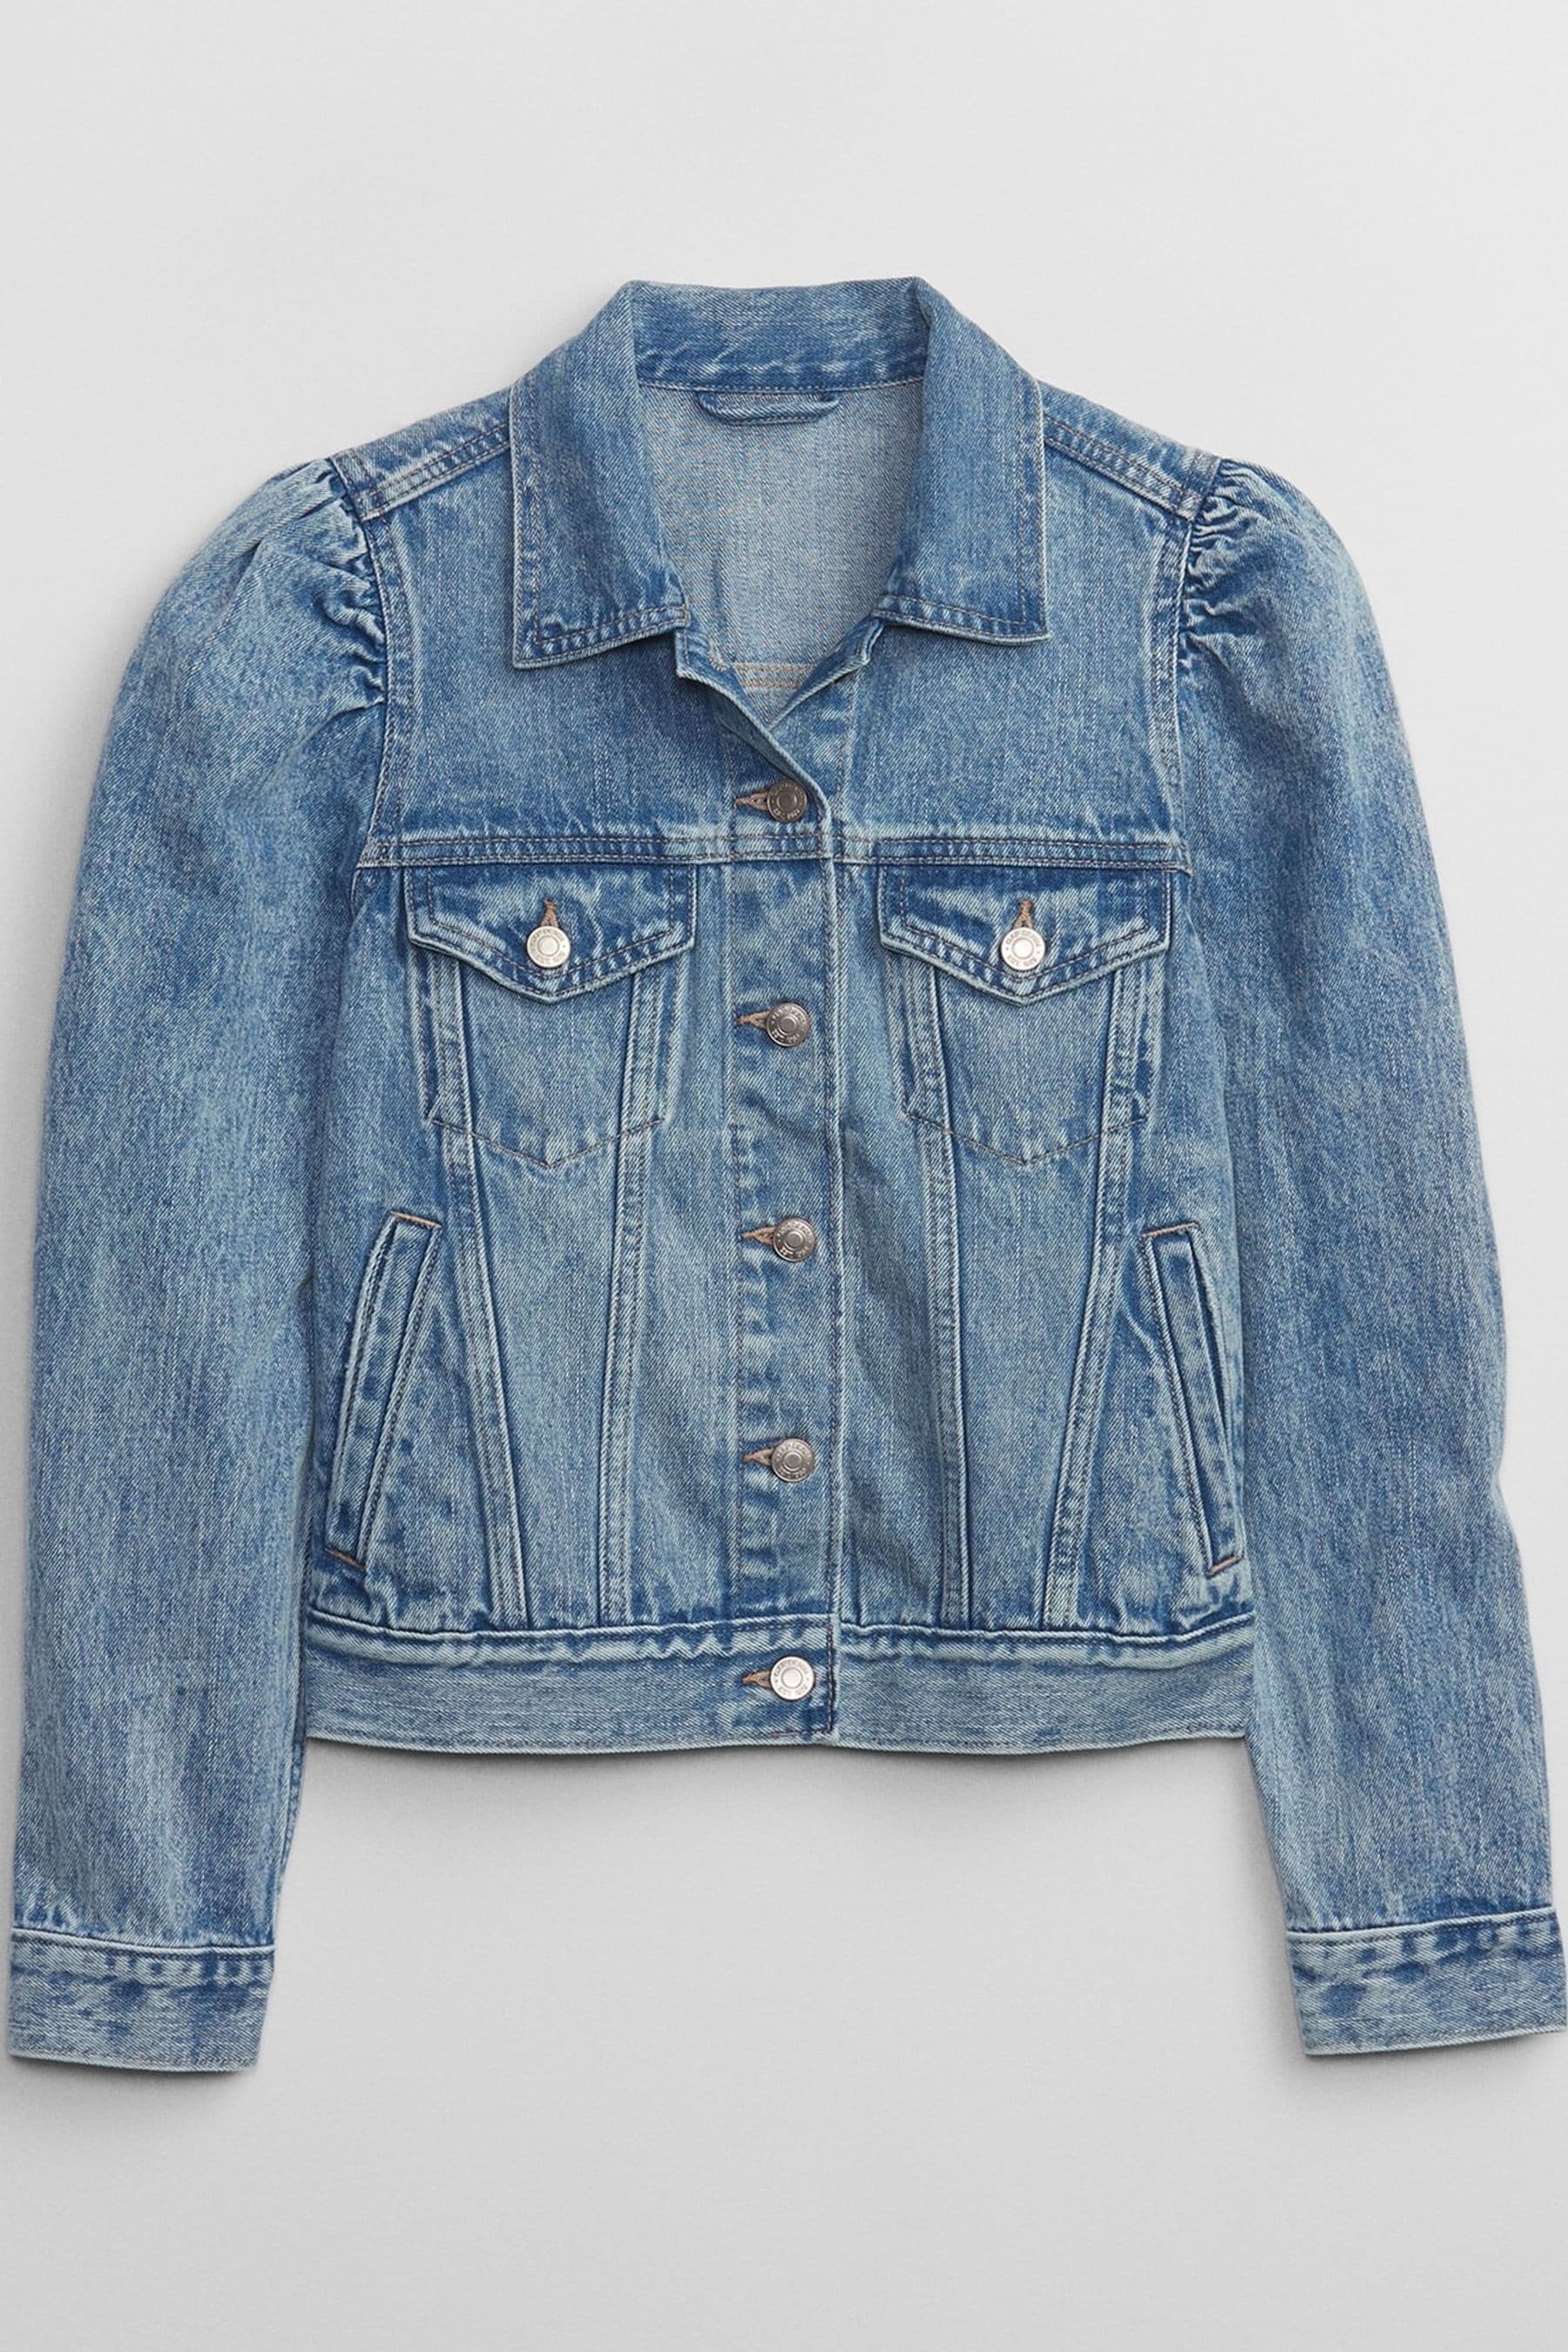 Buy Gap Blue Puff Sleeve Denim Jacket from the Next UK online shop